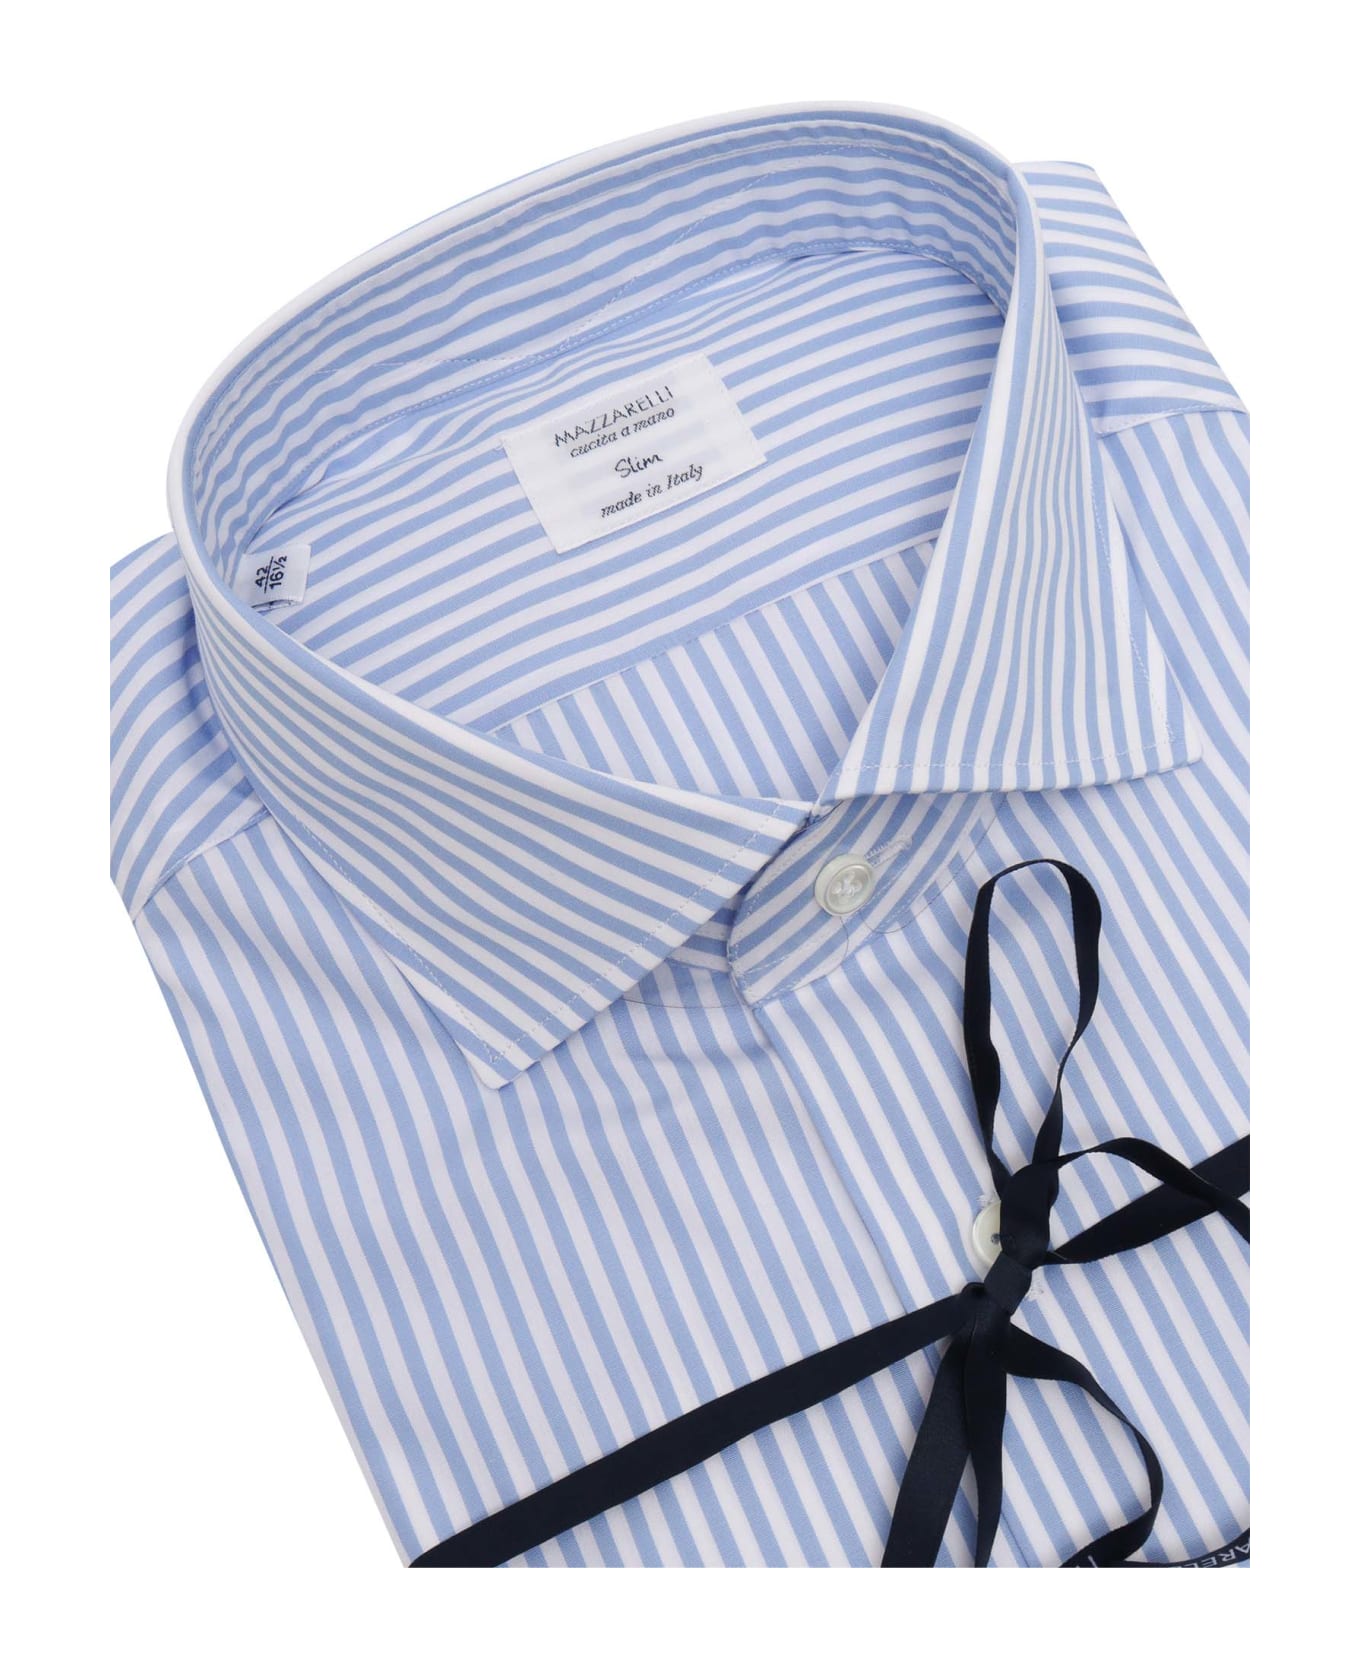 Mazzarelli Slim Fit Striped Shirt - LIGHT BLUE